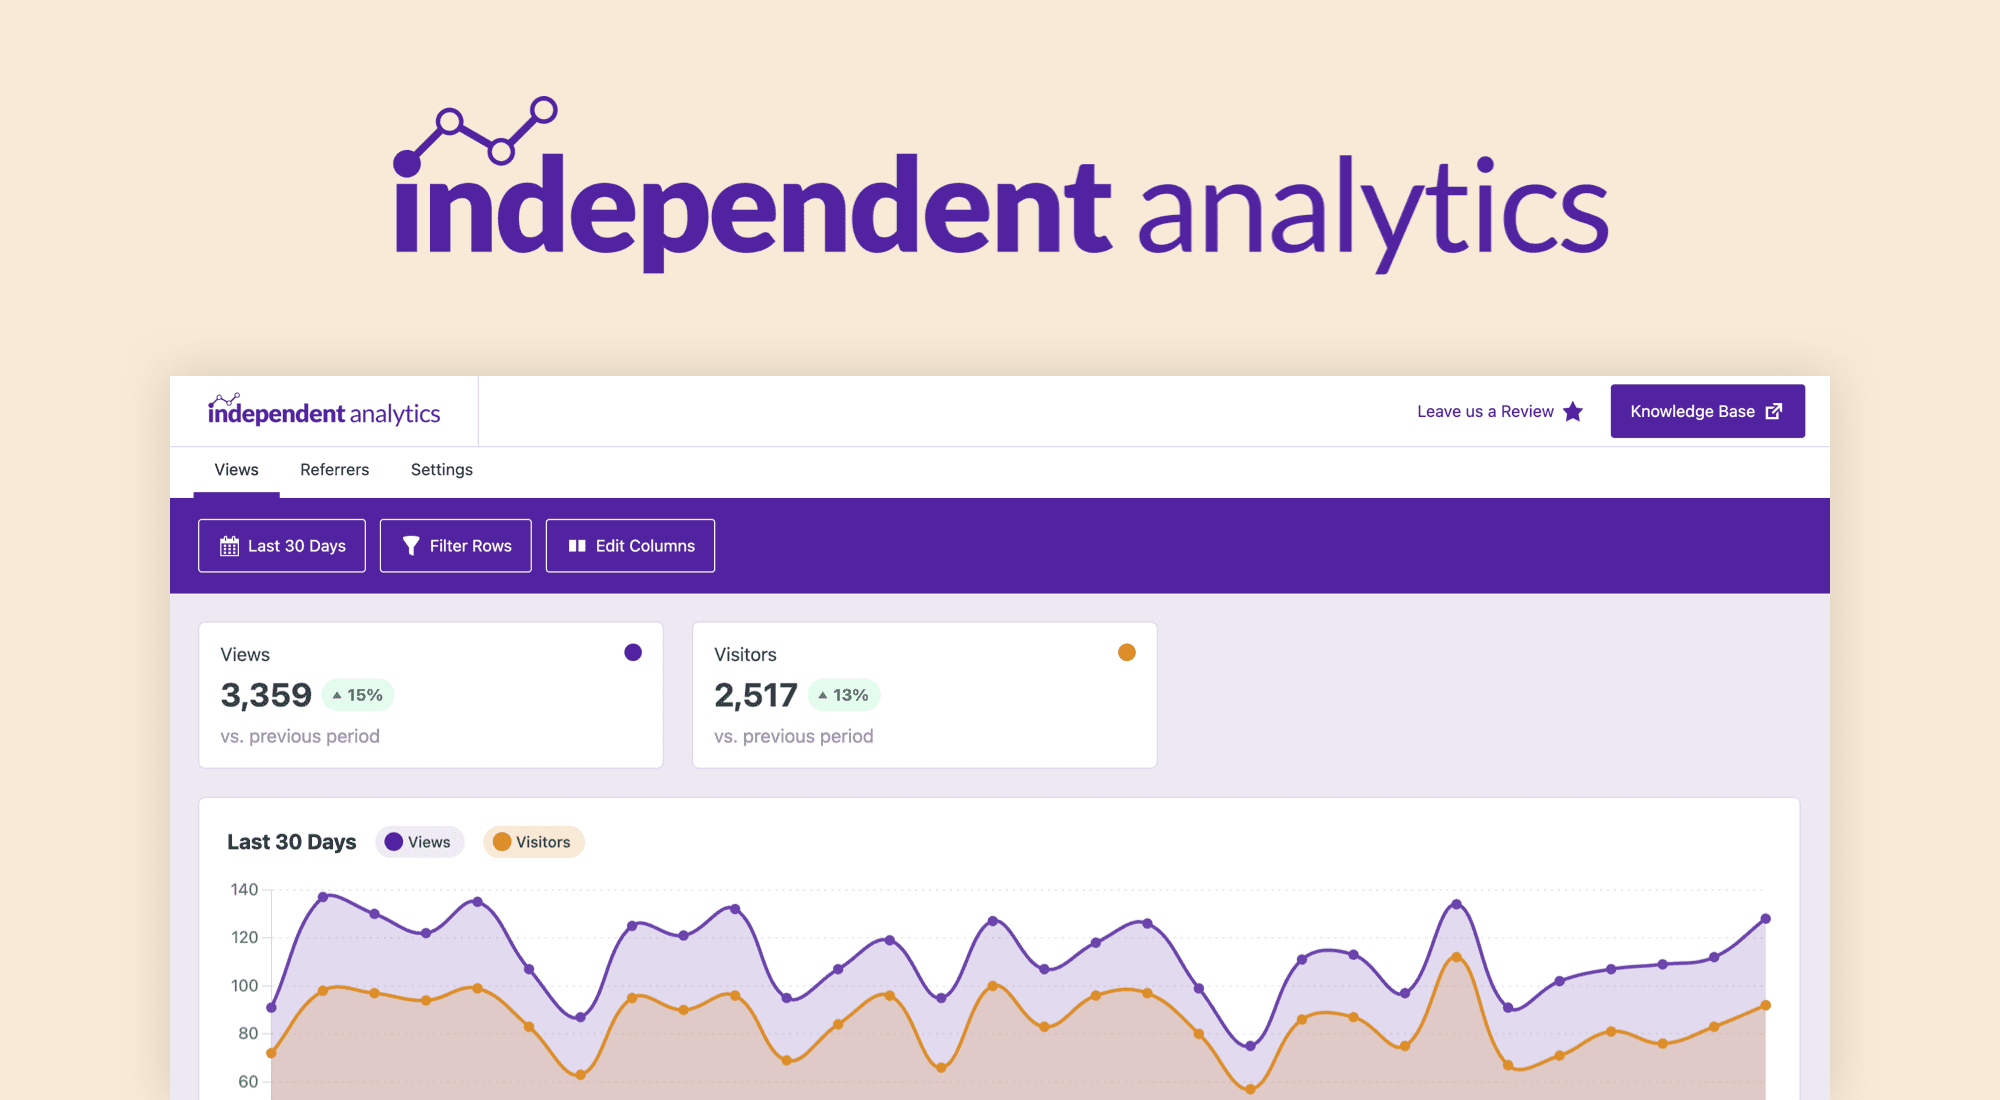 Independent Analytics